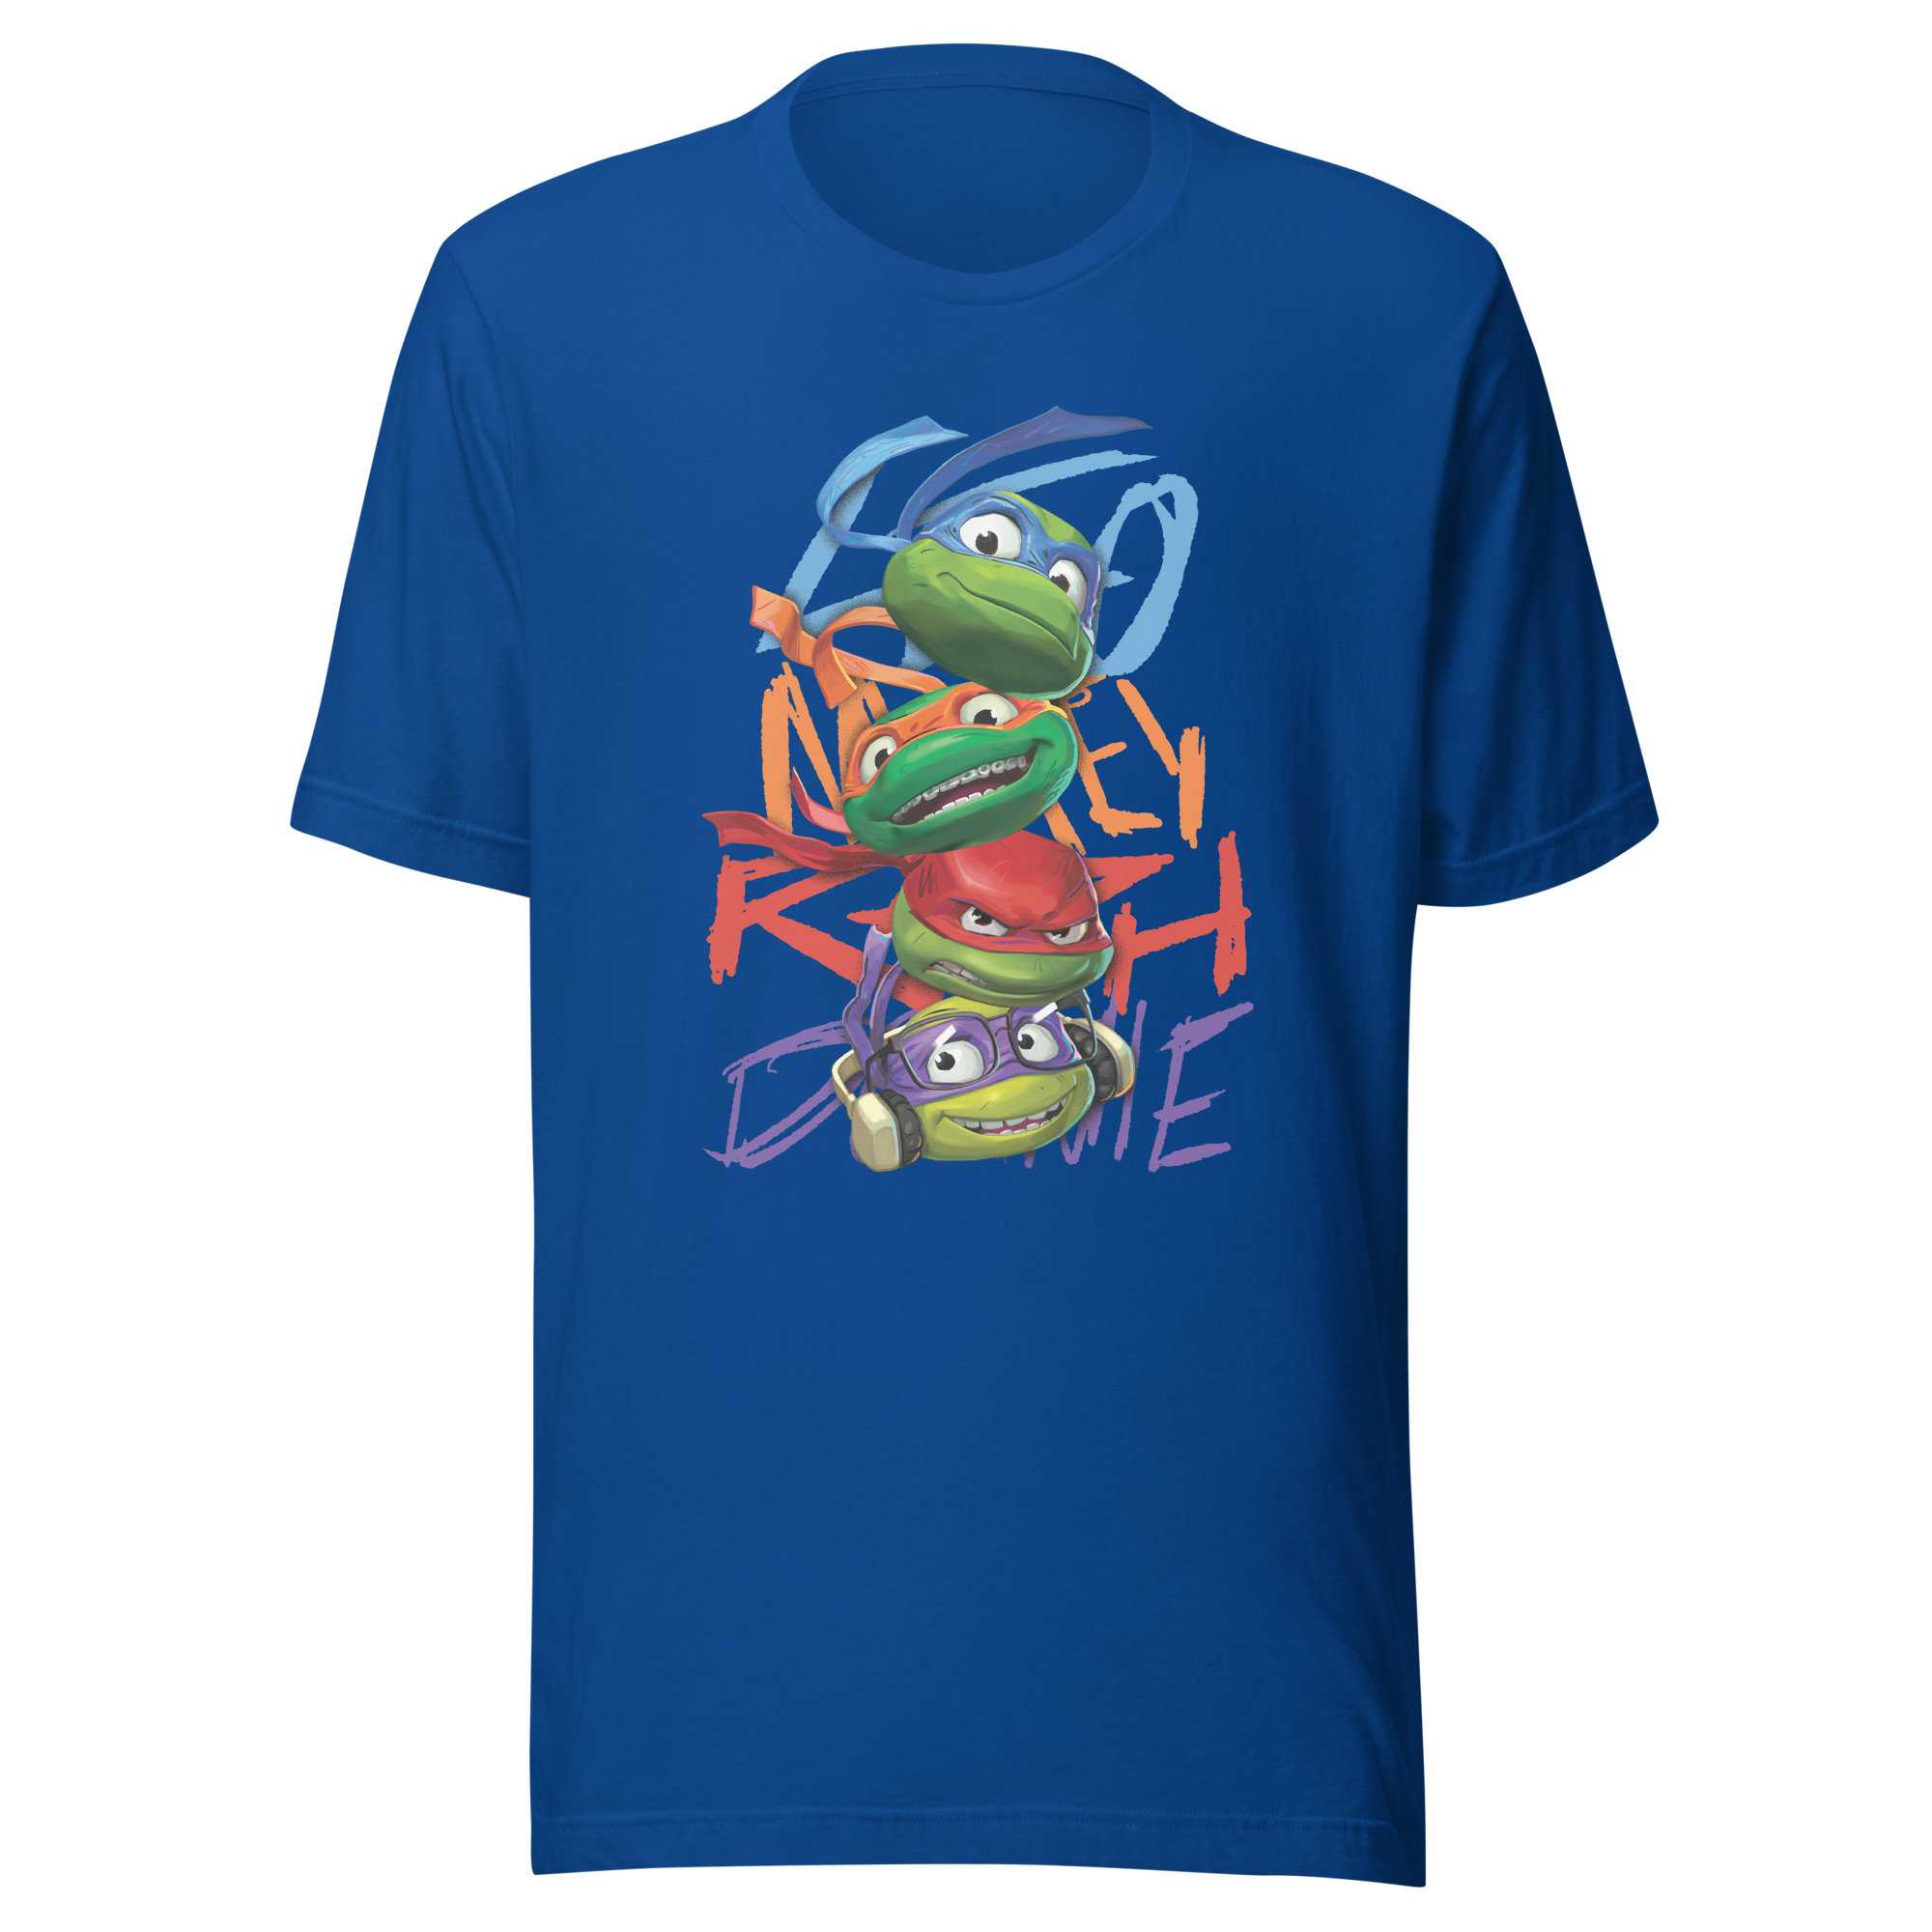 World Of TMNT Ninja Turtles Fight Crew Neck Short Sleeve Men's T-shirt-Small